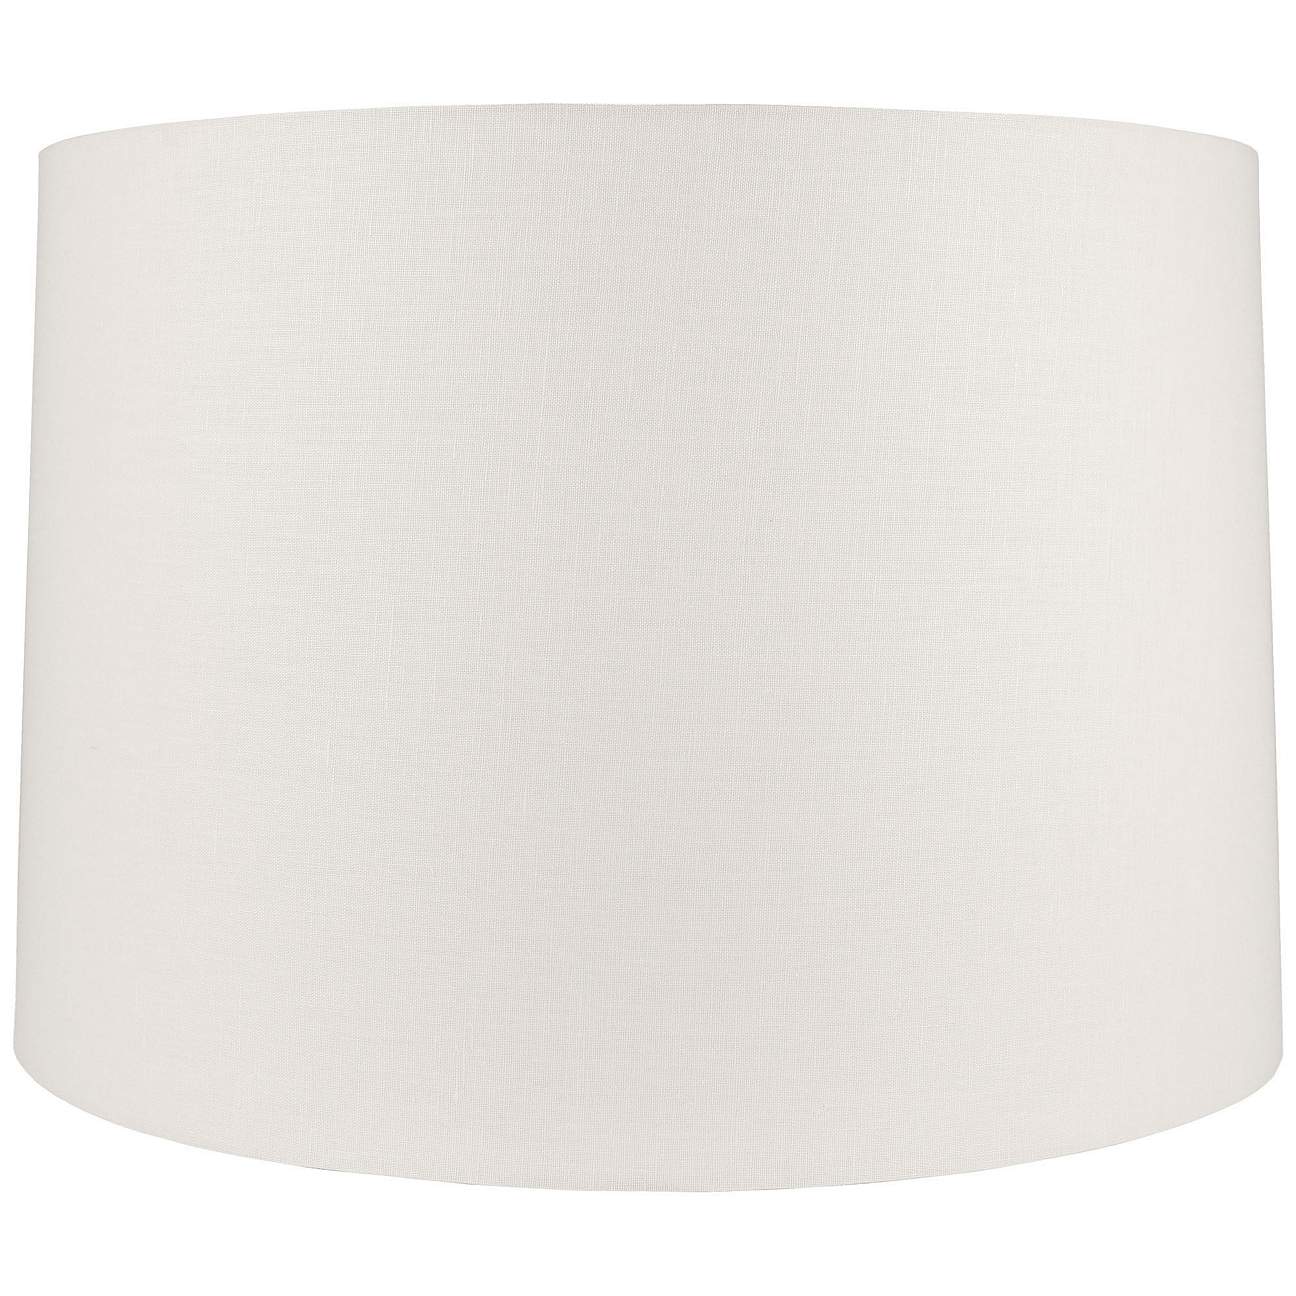 Off-White Linen Round Drum Shade 17x18x12 (Spider) - #8M207 | Lamps Plus